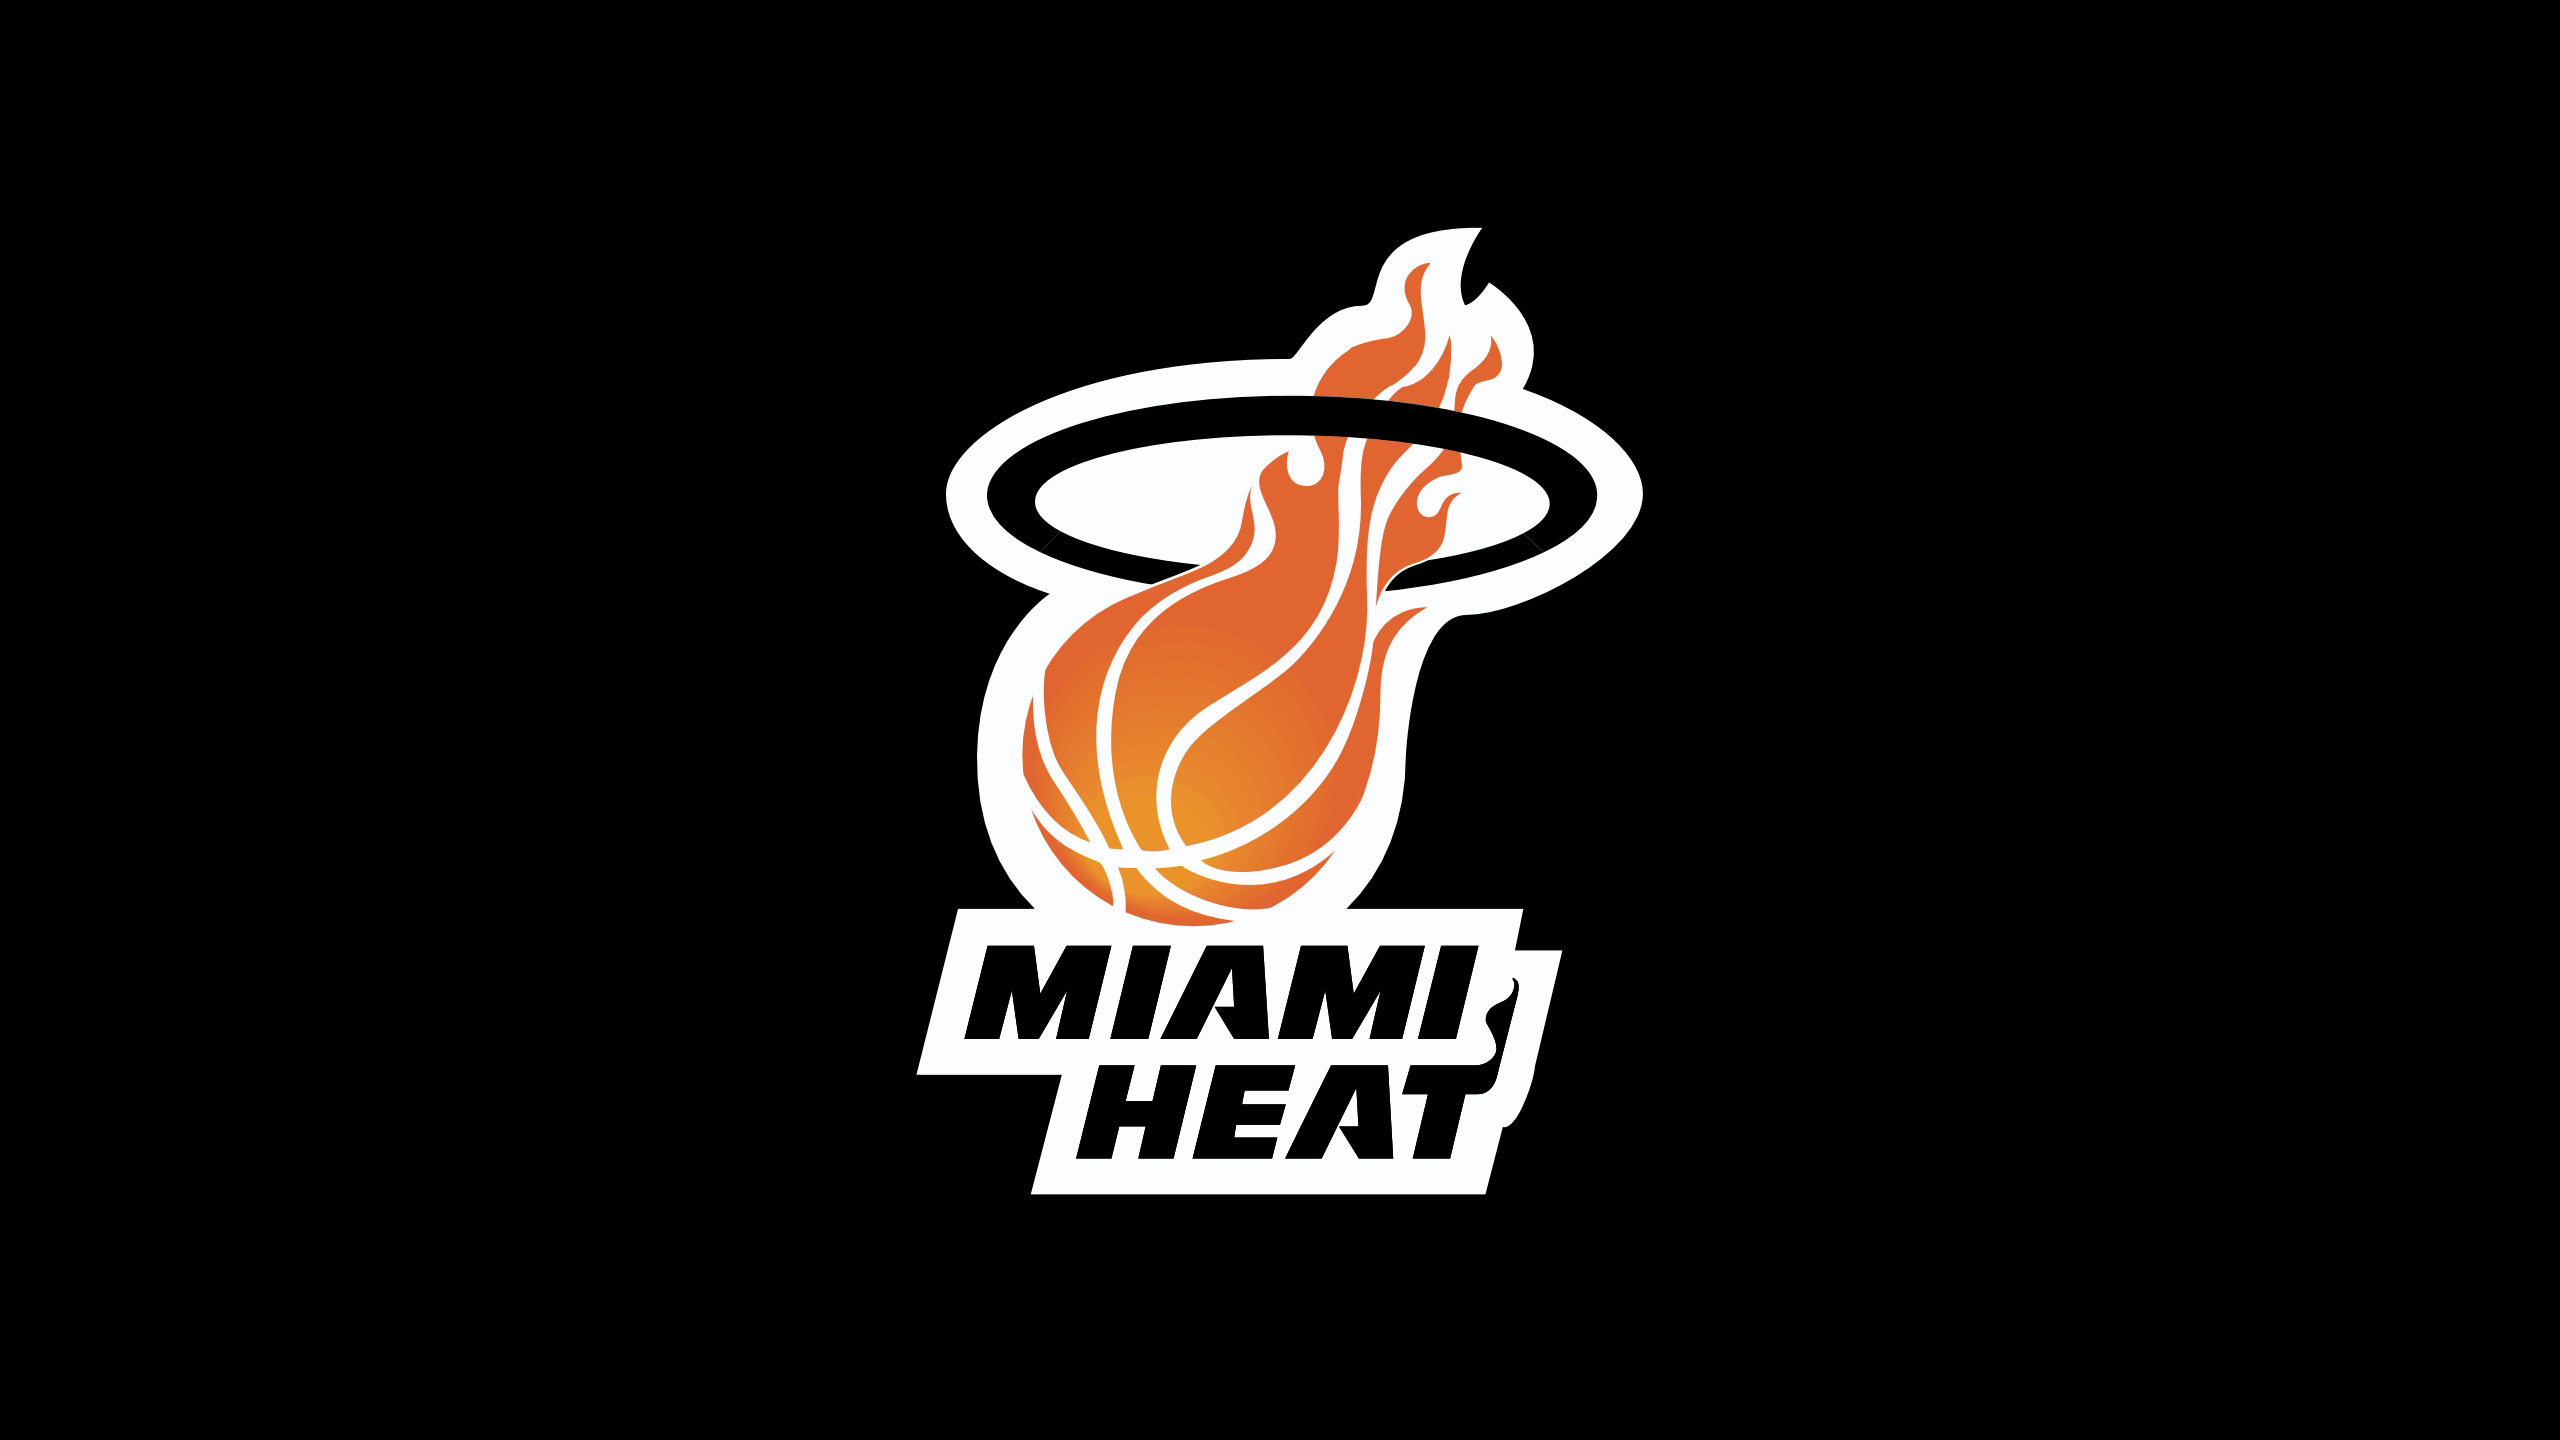 Nba Miami Heat Team Logo Black Wallpaper In Basketball